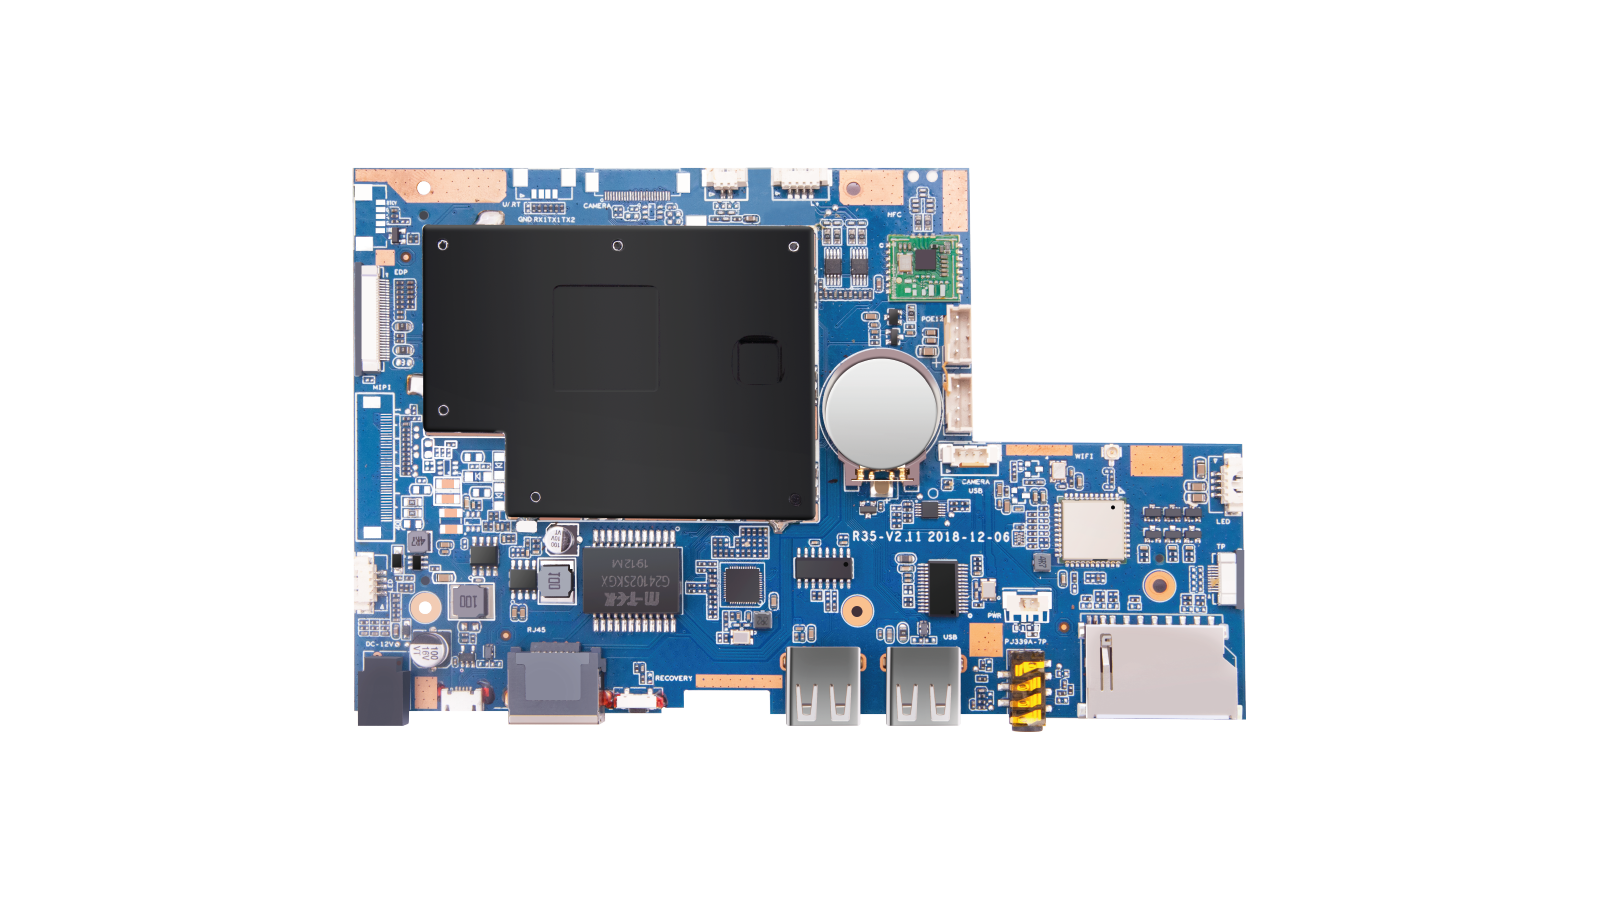 LV-Tron LVB-3566-3 embedded board using Rockchip RK-3566 chipset